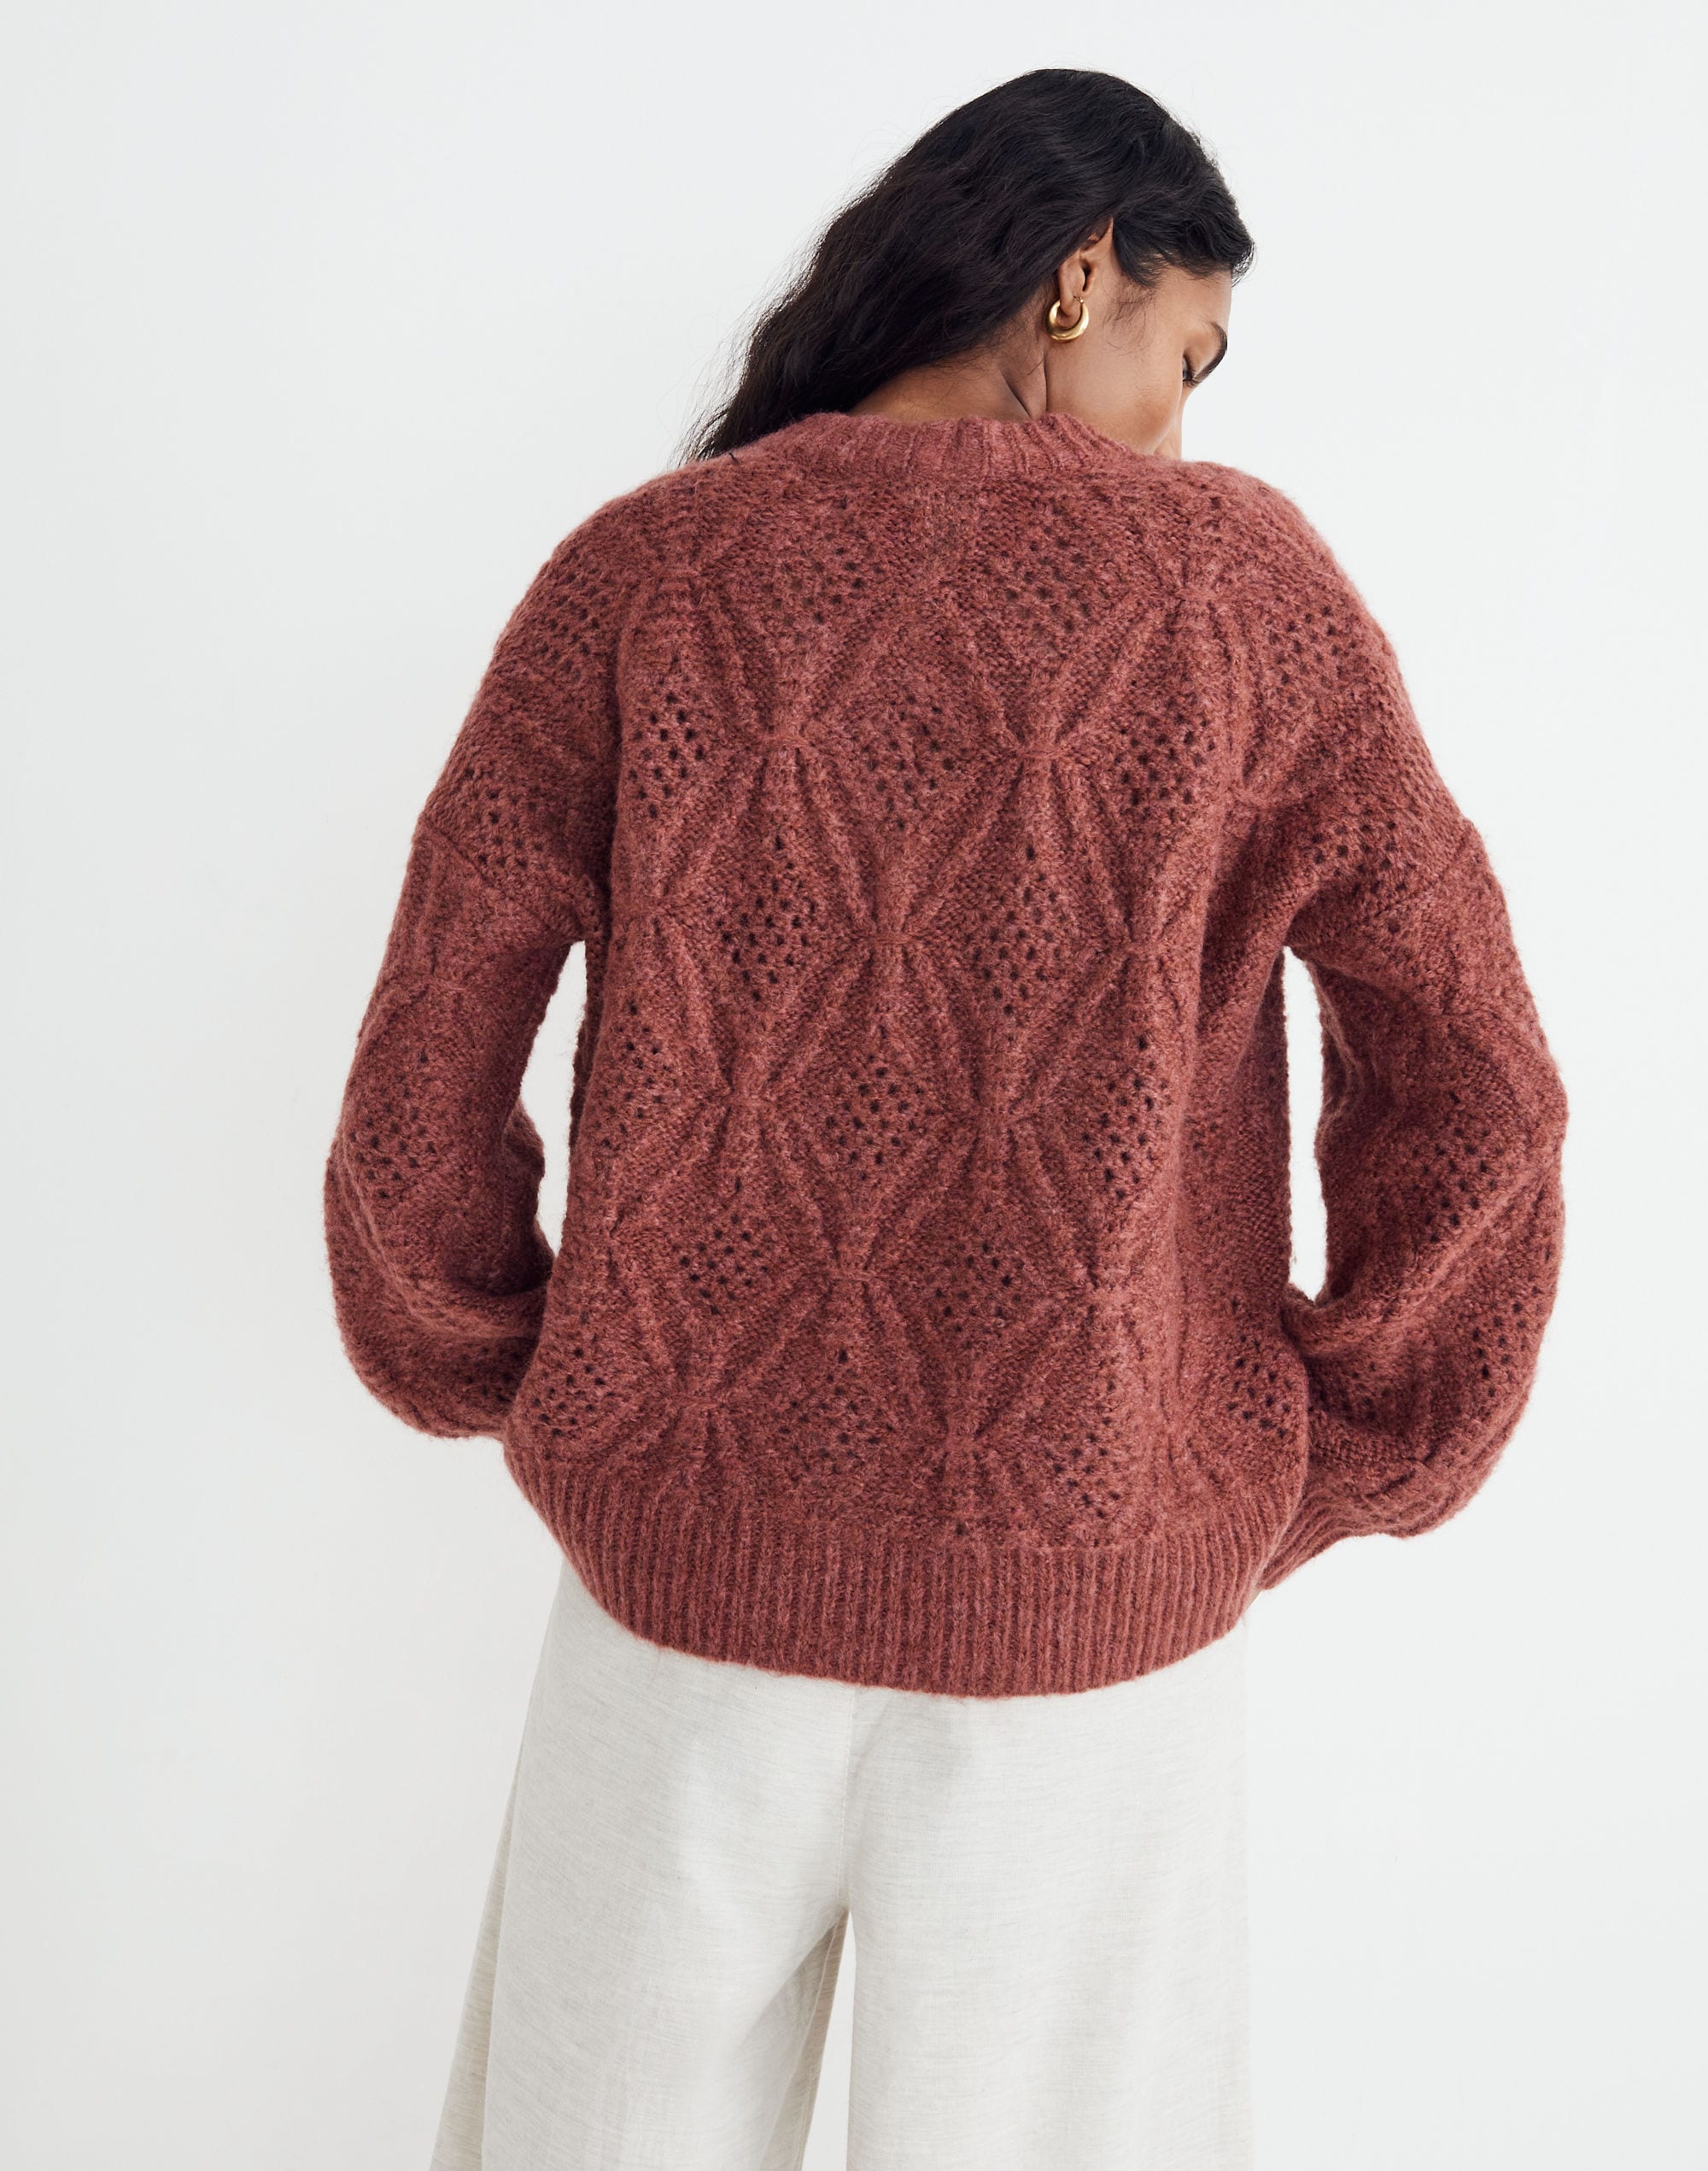 red by BKE Pointelle Pullover Sweater - Women's Sweaters in Dusty Rose